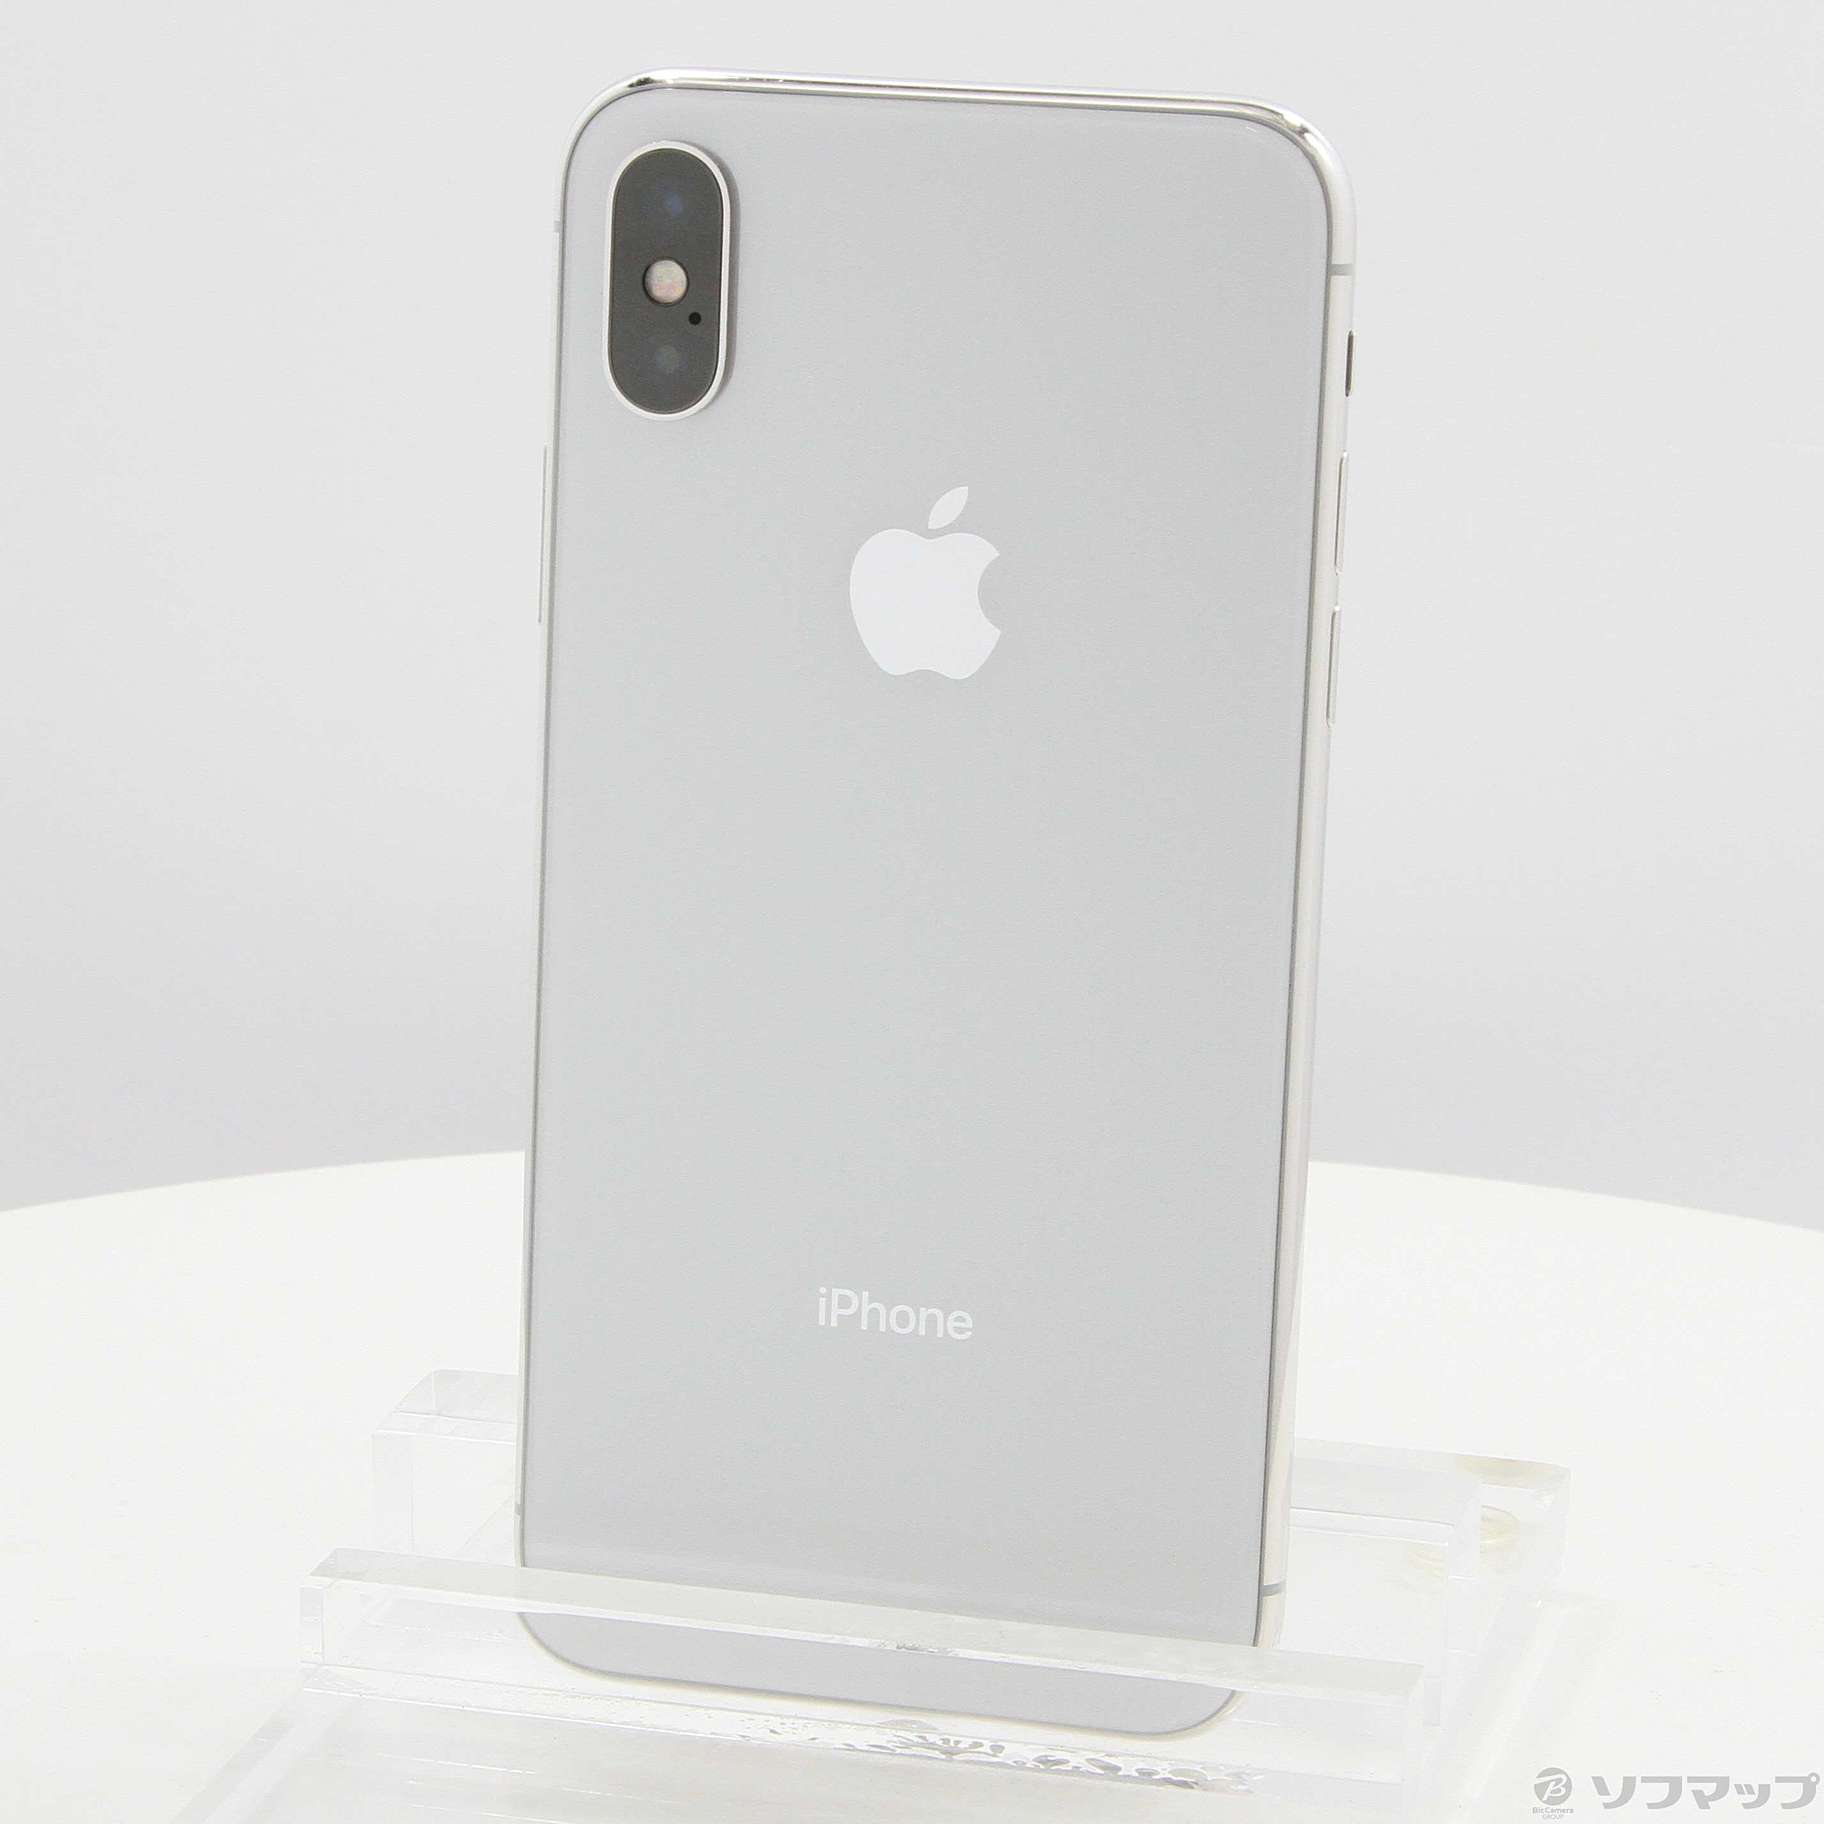 【SIMフリー】iPhone X / 64GB / シルバー